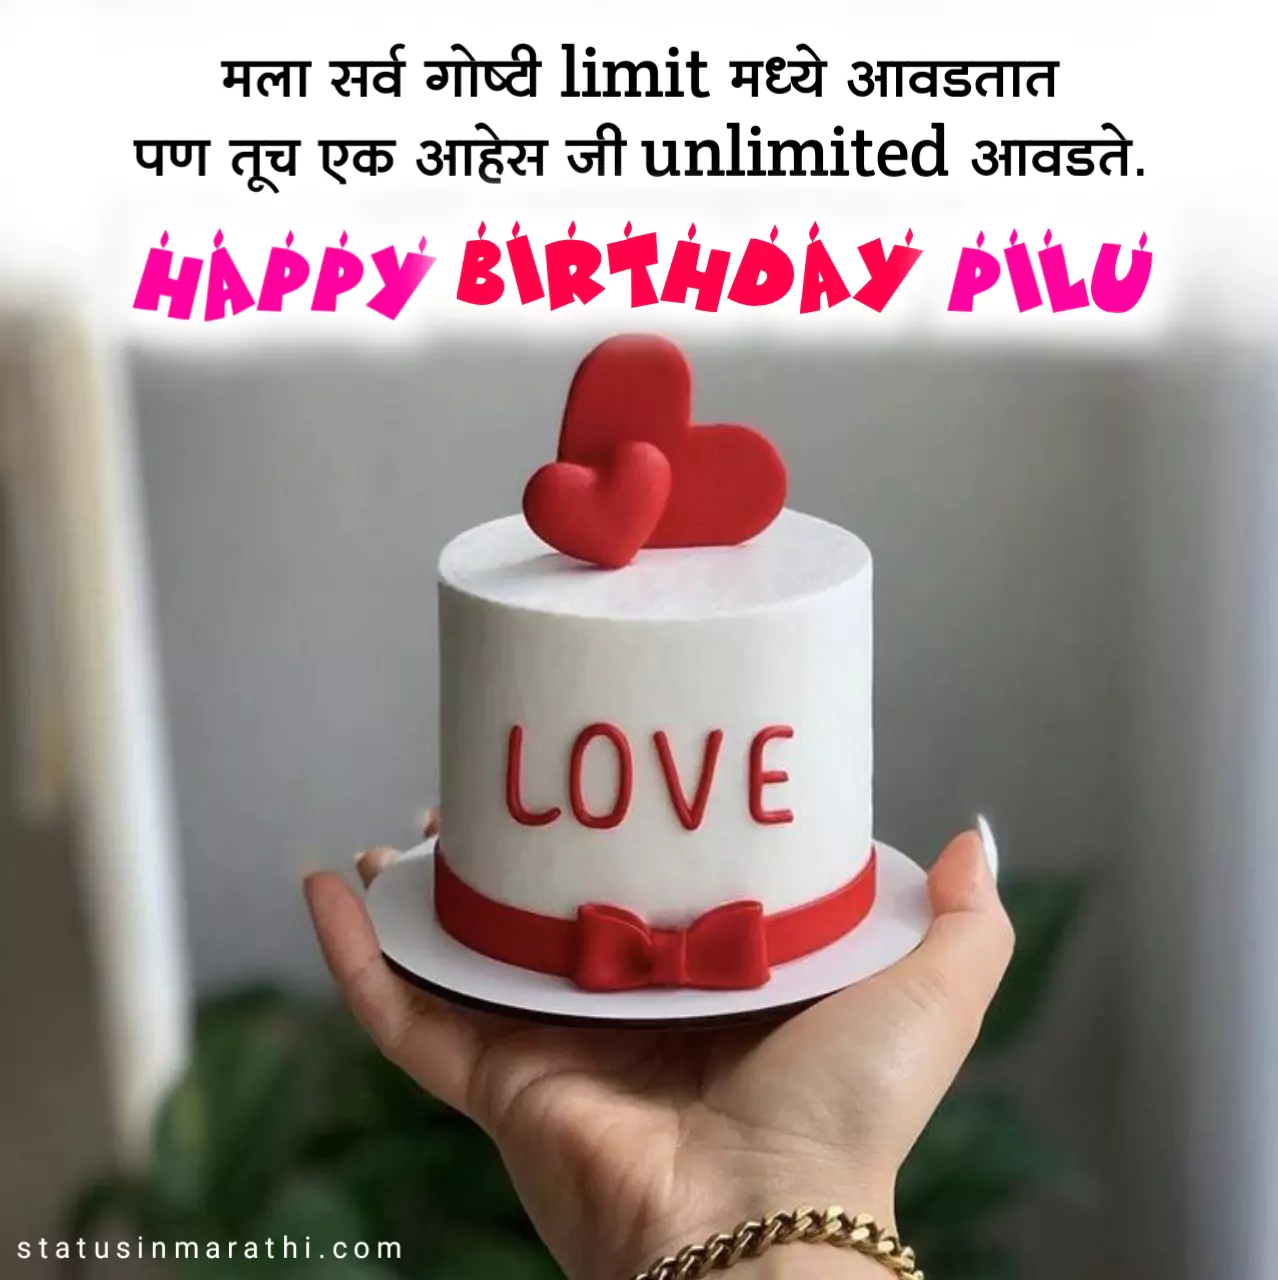 Happy Birthday wishes for girlfriend in marathi